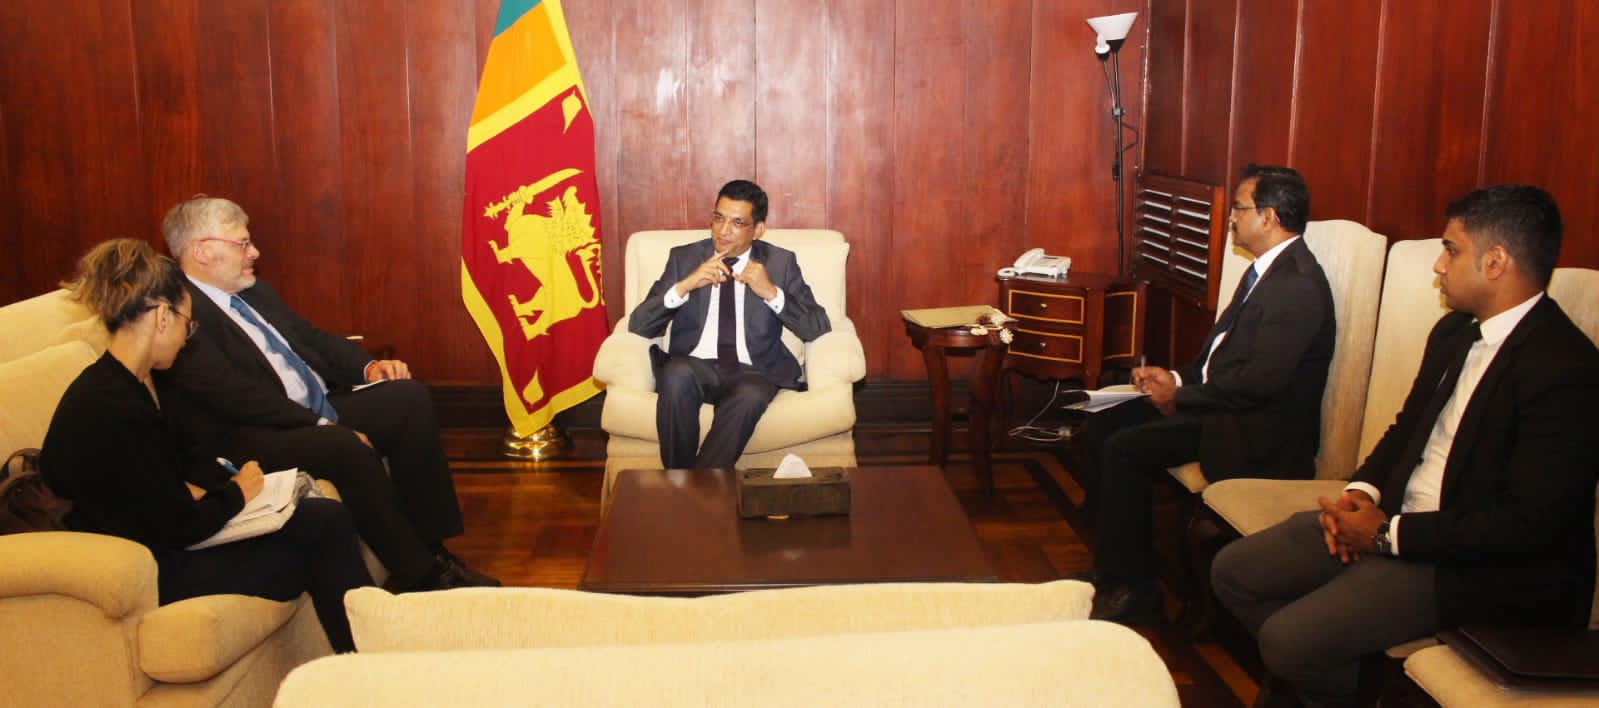 Ambassador of Israel to Sri Lanka Gilon calls on Foreign Minister Sabry